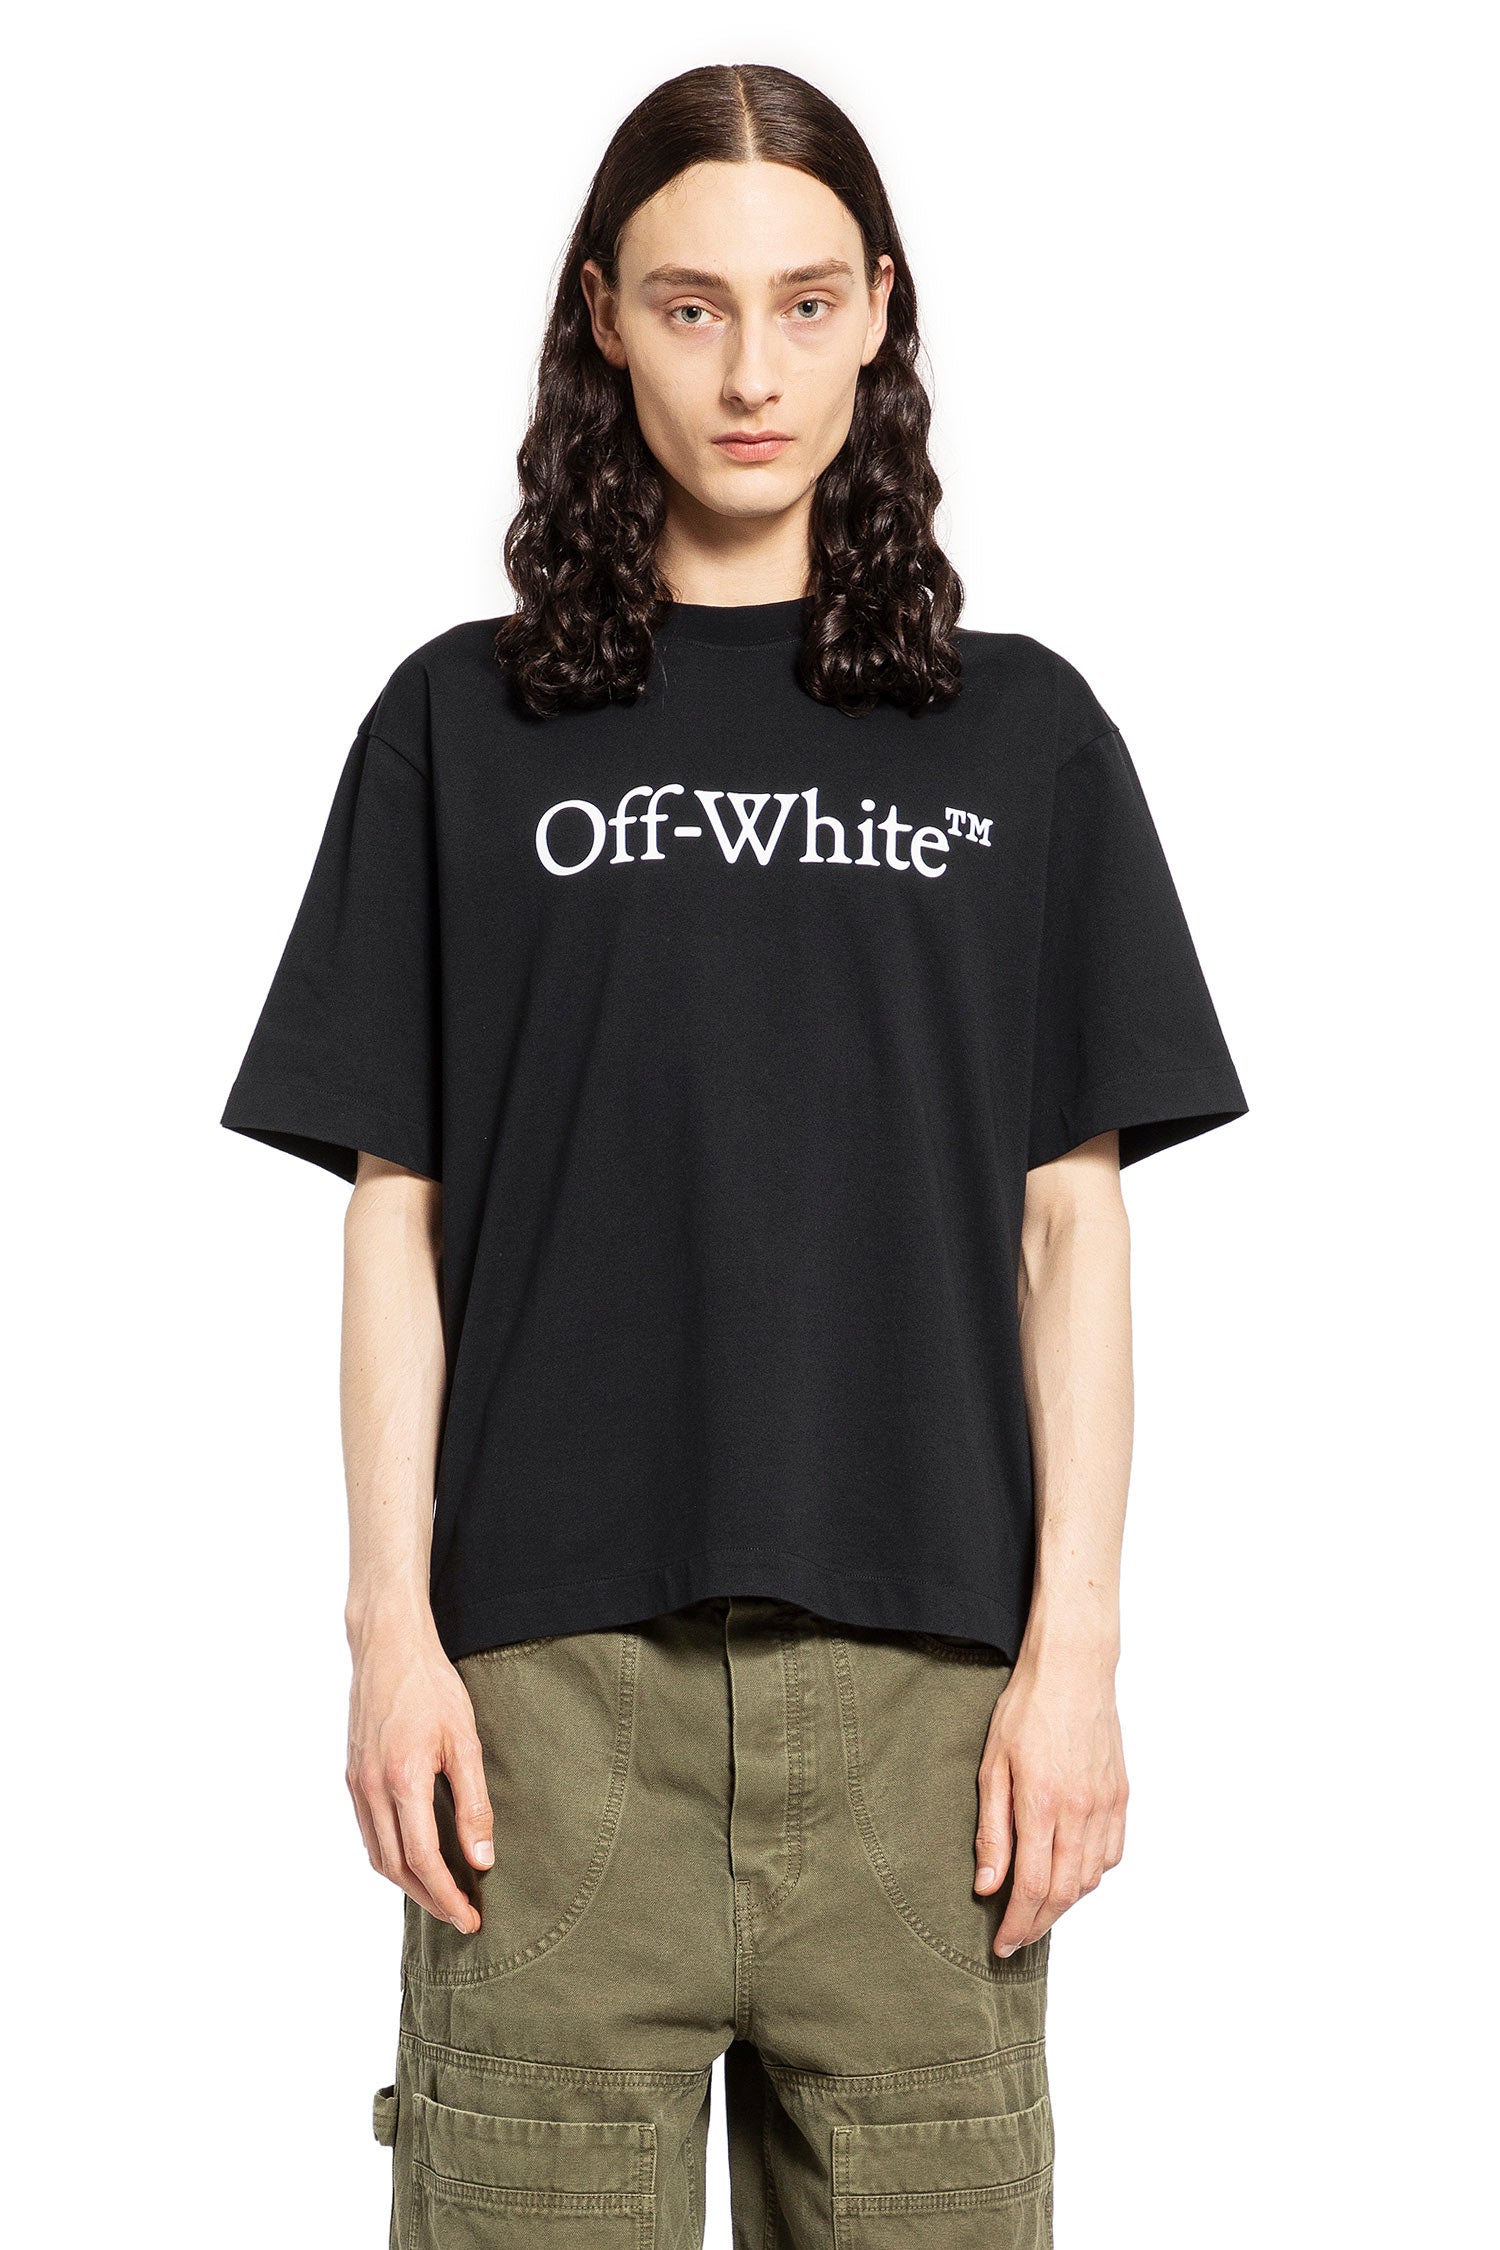 OFF-WHITE MAN BLACK T-SHIRTS